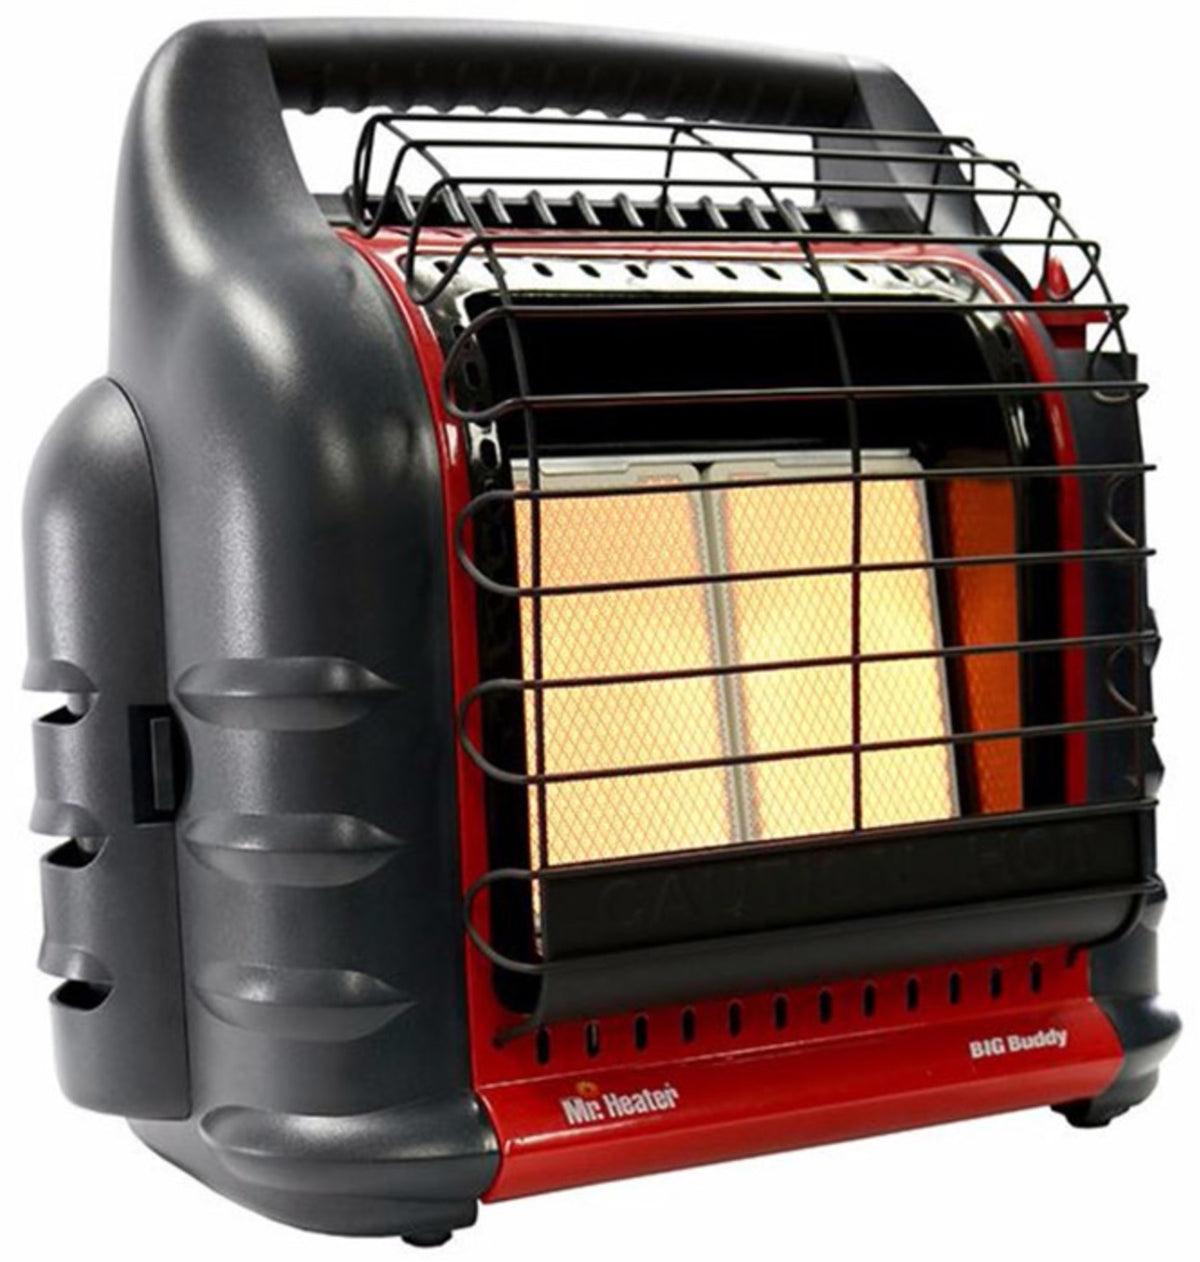 Mr. Heater F274805 Big Buddy Propane Portable Heater, 18000 BTU